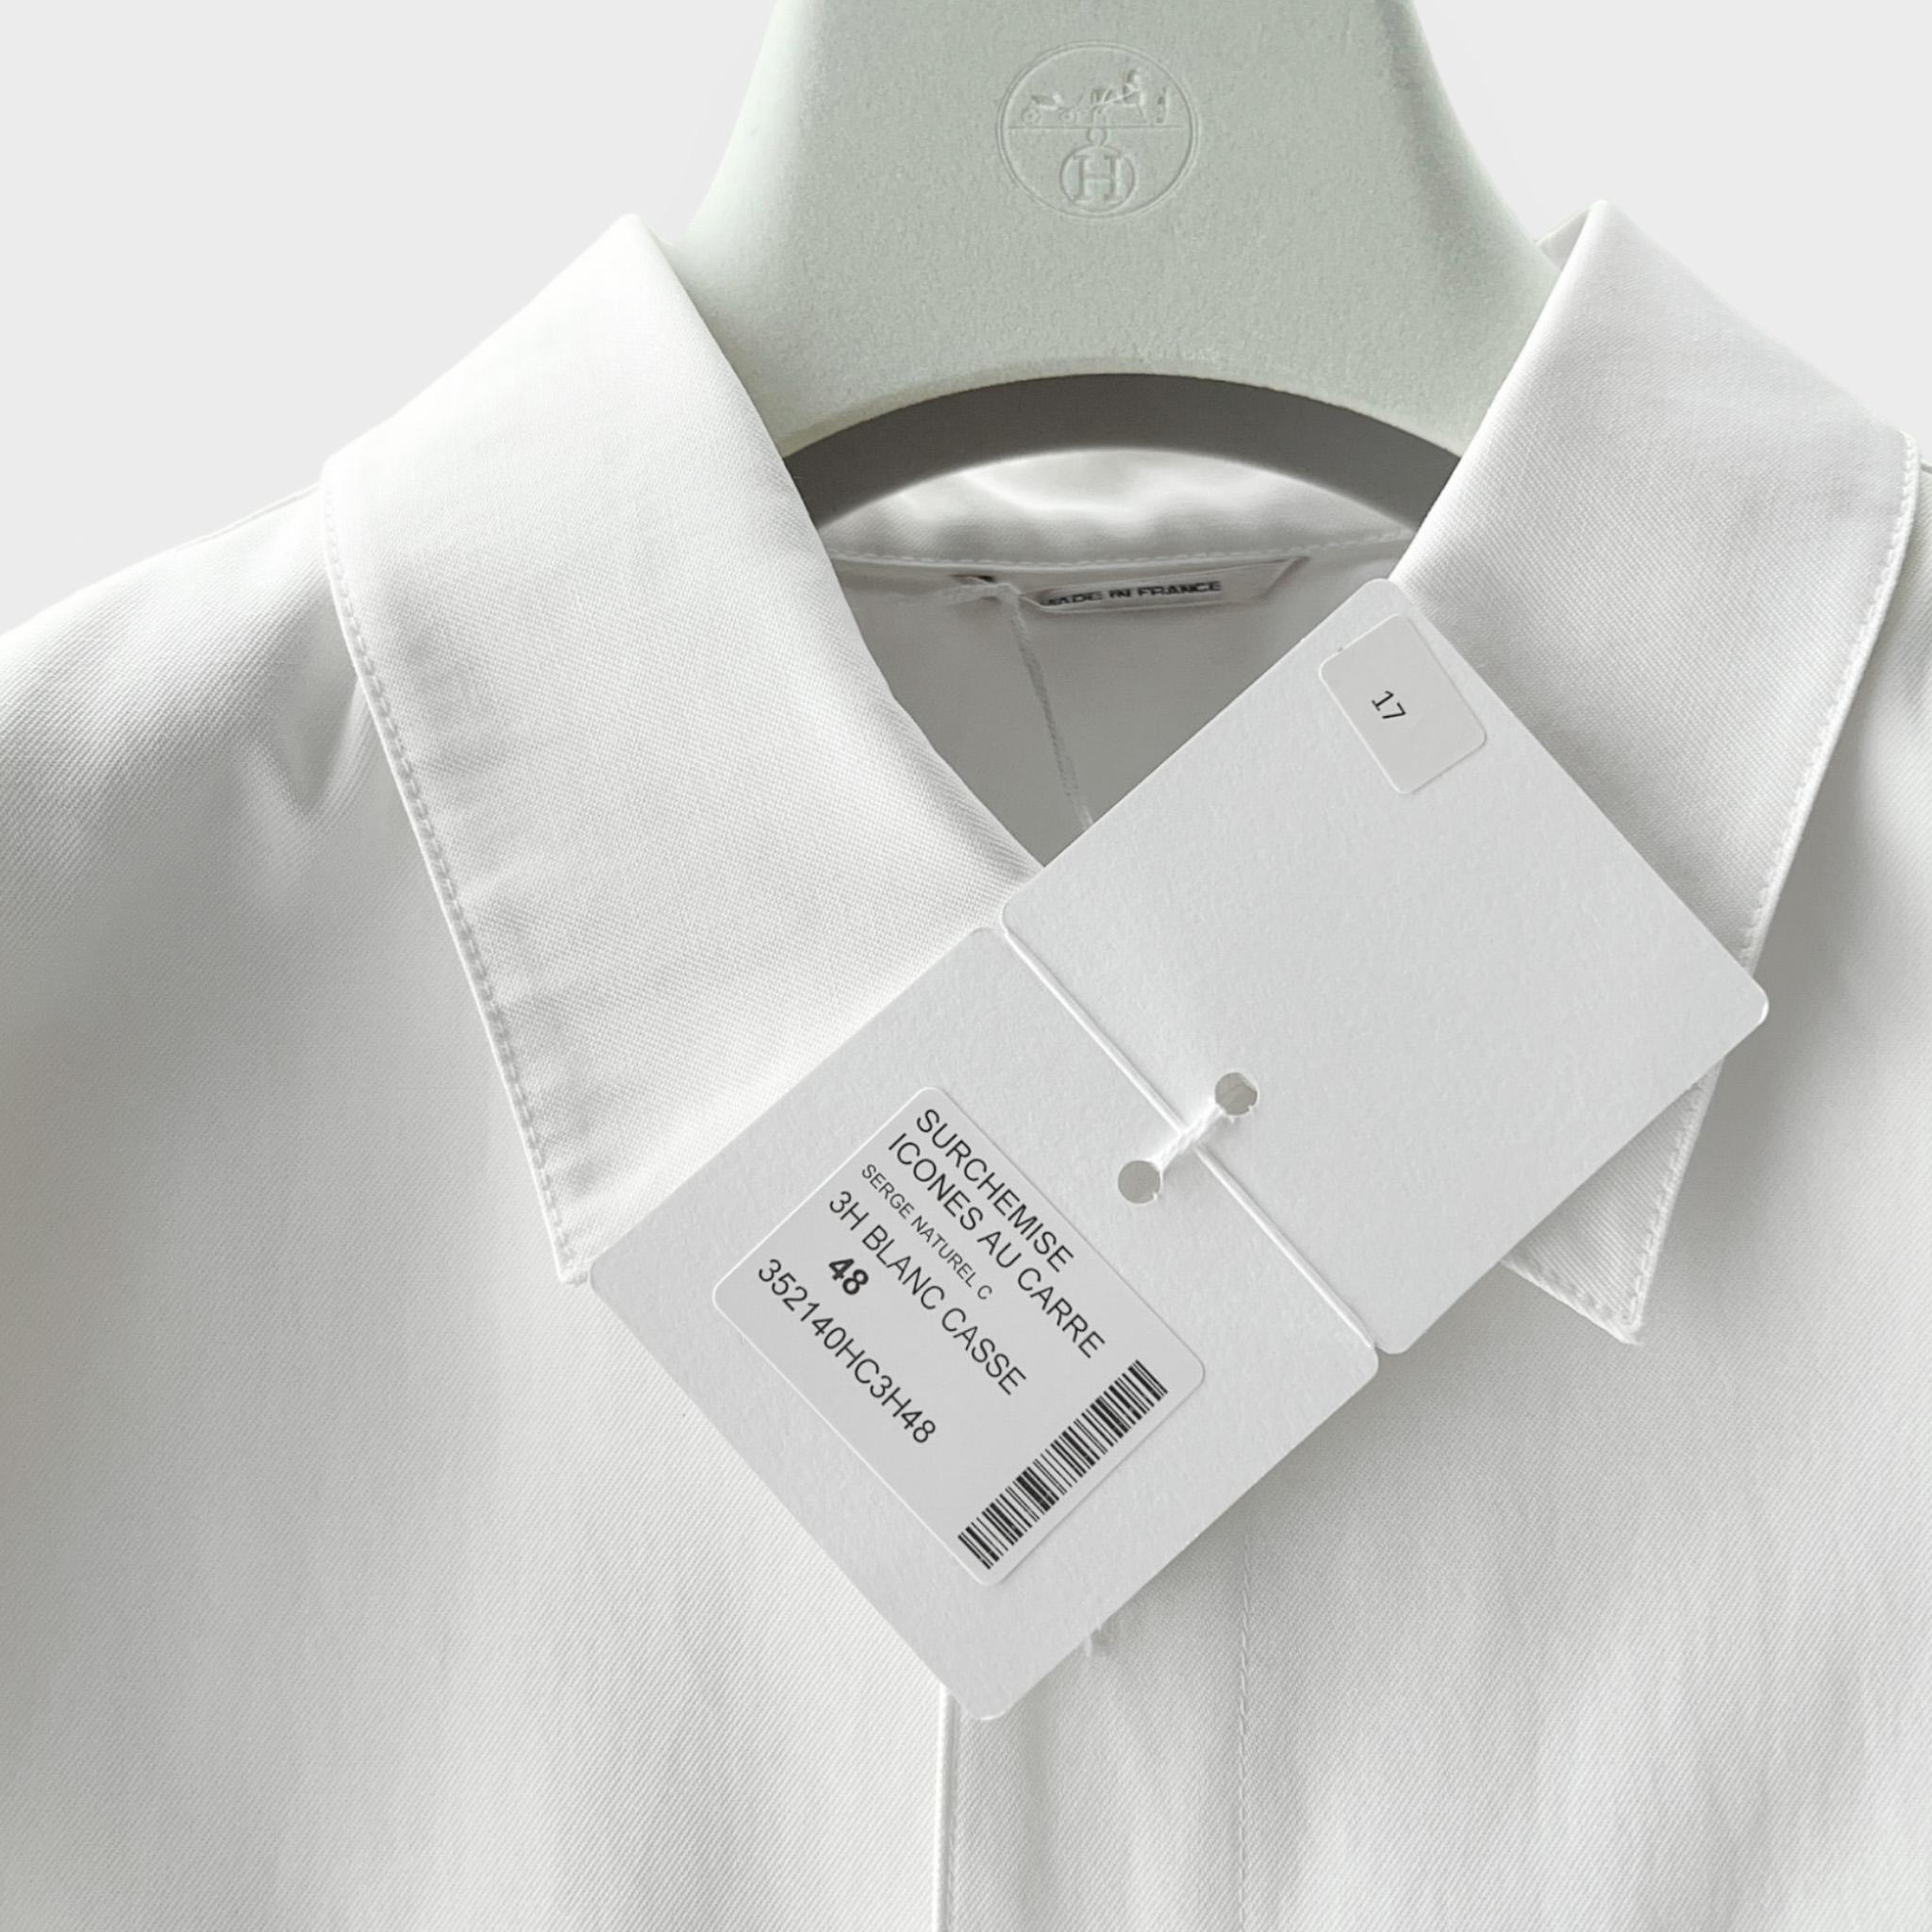 Hermès Men's 'Icones au Carre' Overshirt, White, 48 EU, Medium UK For Sale 3